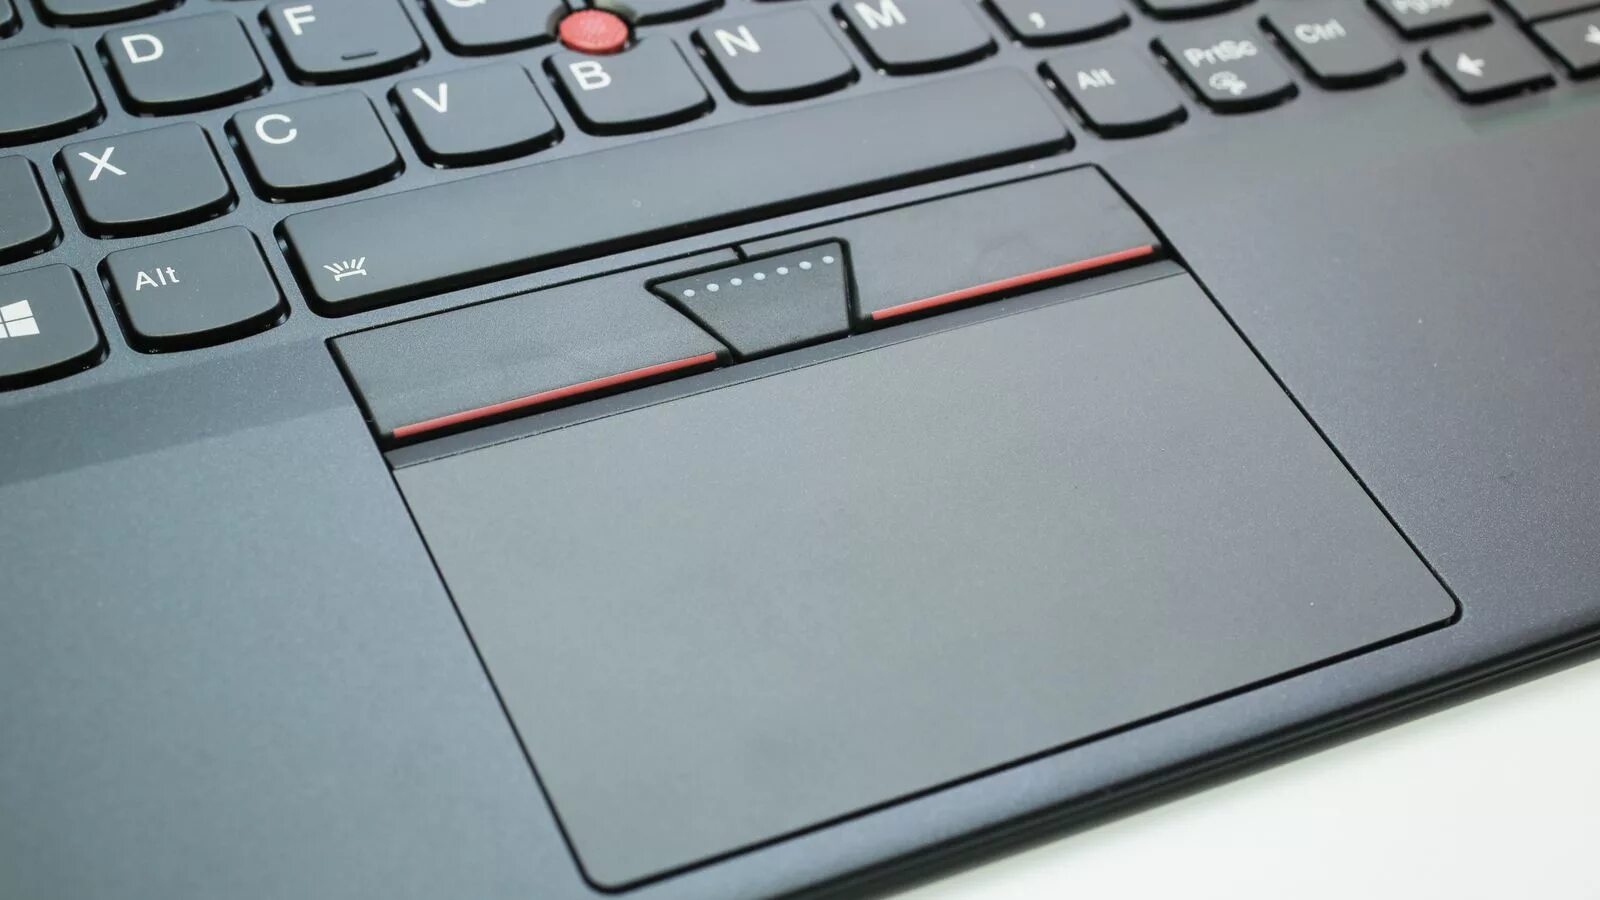 Панель ноутбука леново. T480s Touchpad. Тачпад ноутбука Lenovo. Ноутбук леново трекпад. Lenovo Yoga Touchpad.